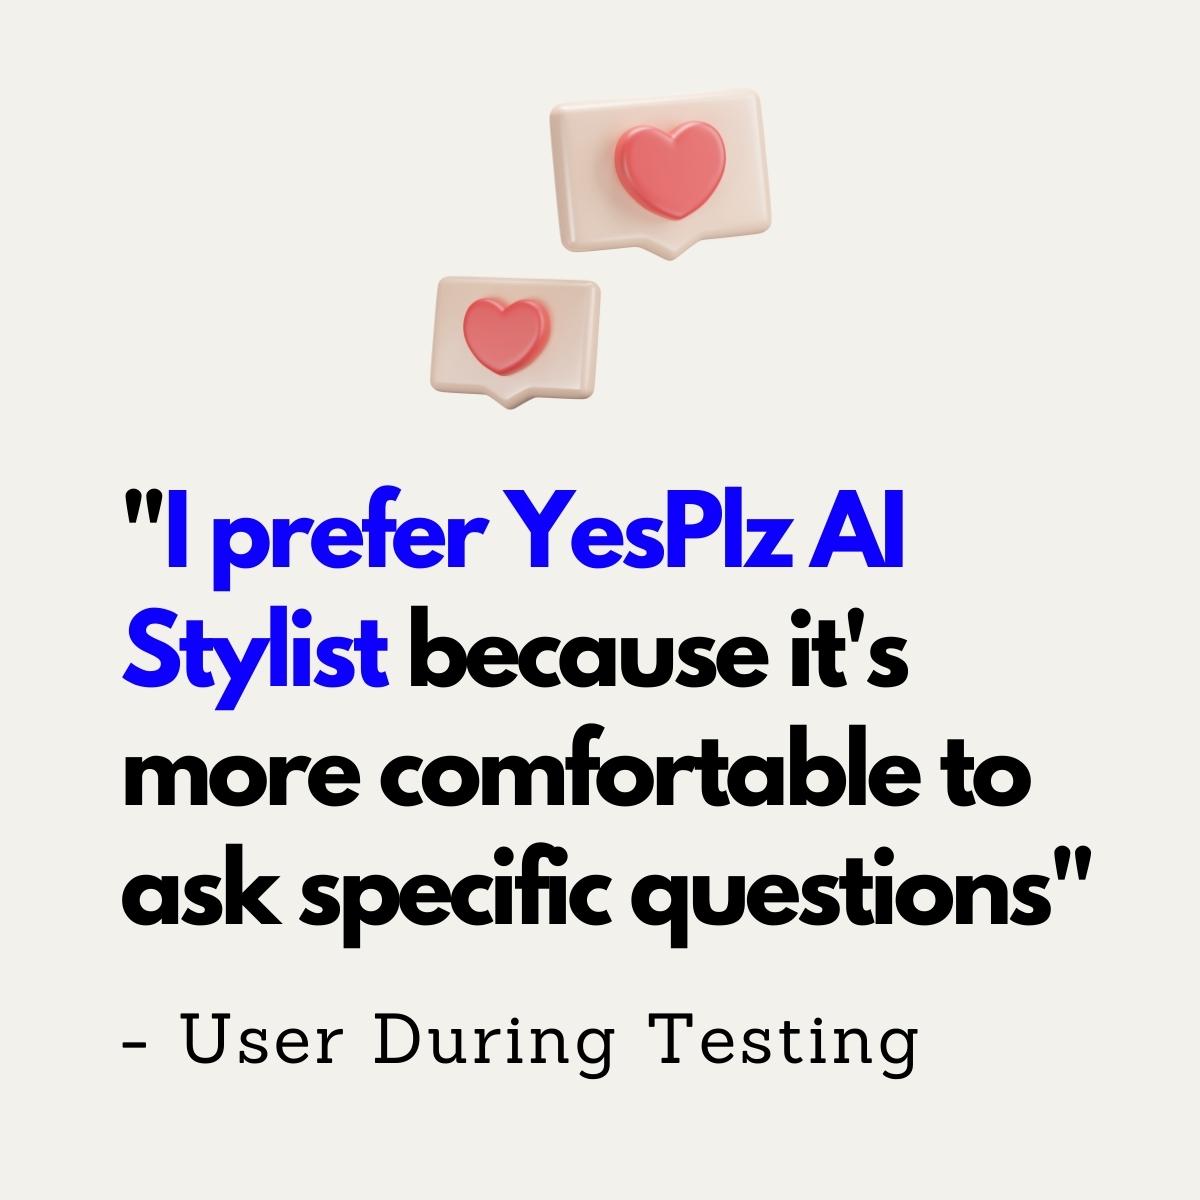 User feedback on YesPlz AI Stylist with 3D hearts